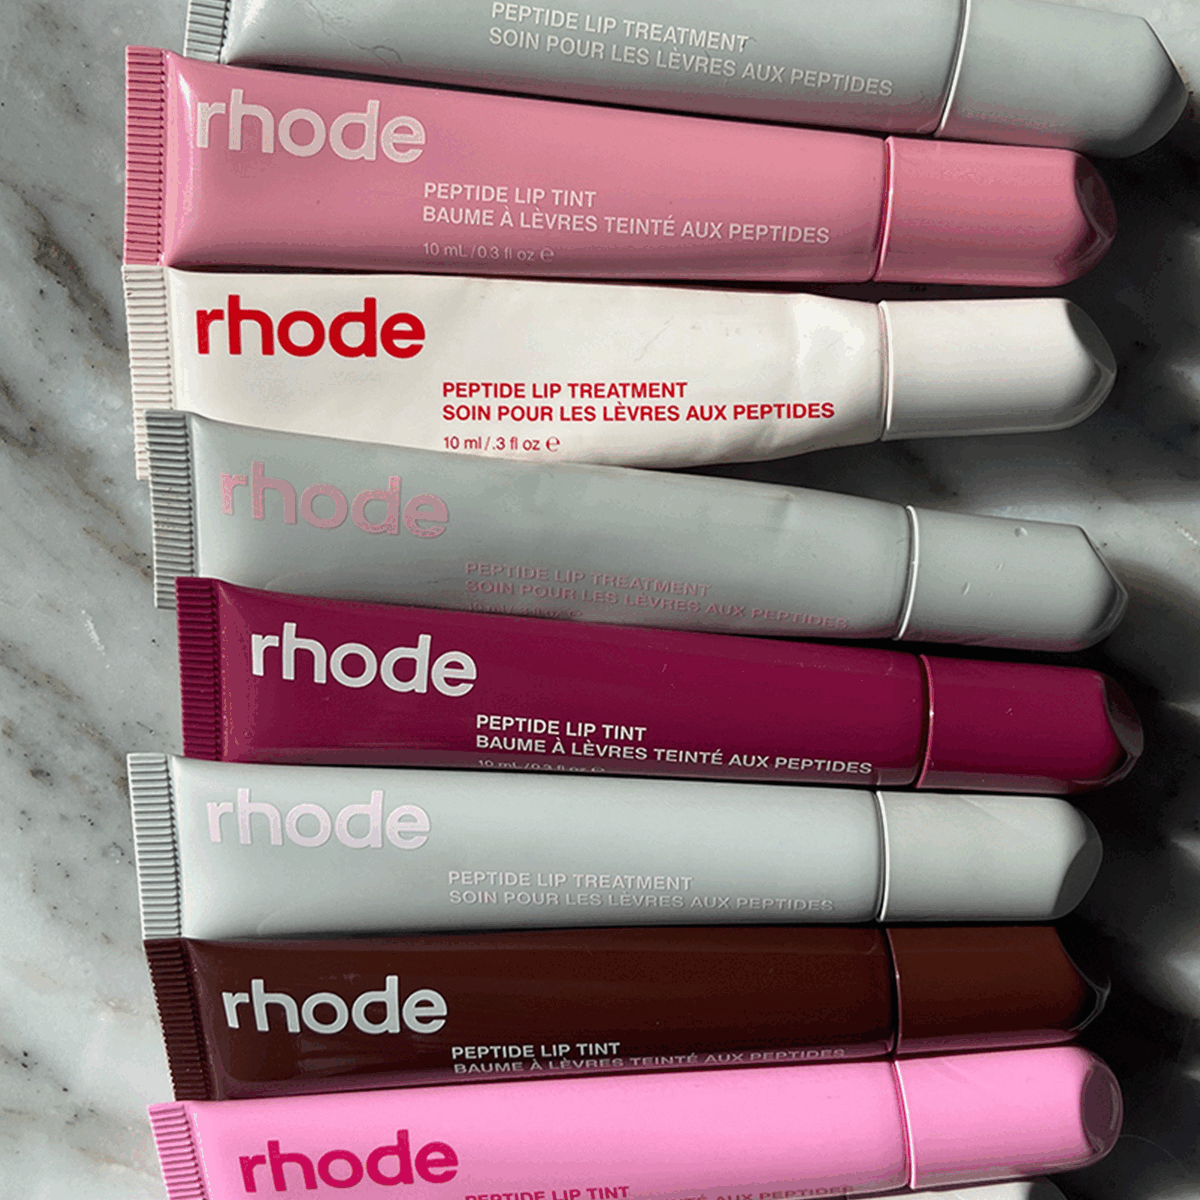 Rhode Peptide Lip Treatment Review